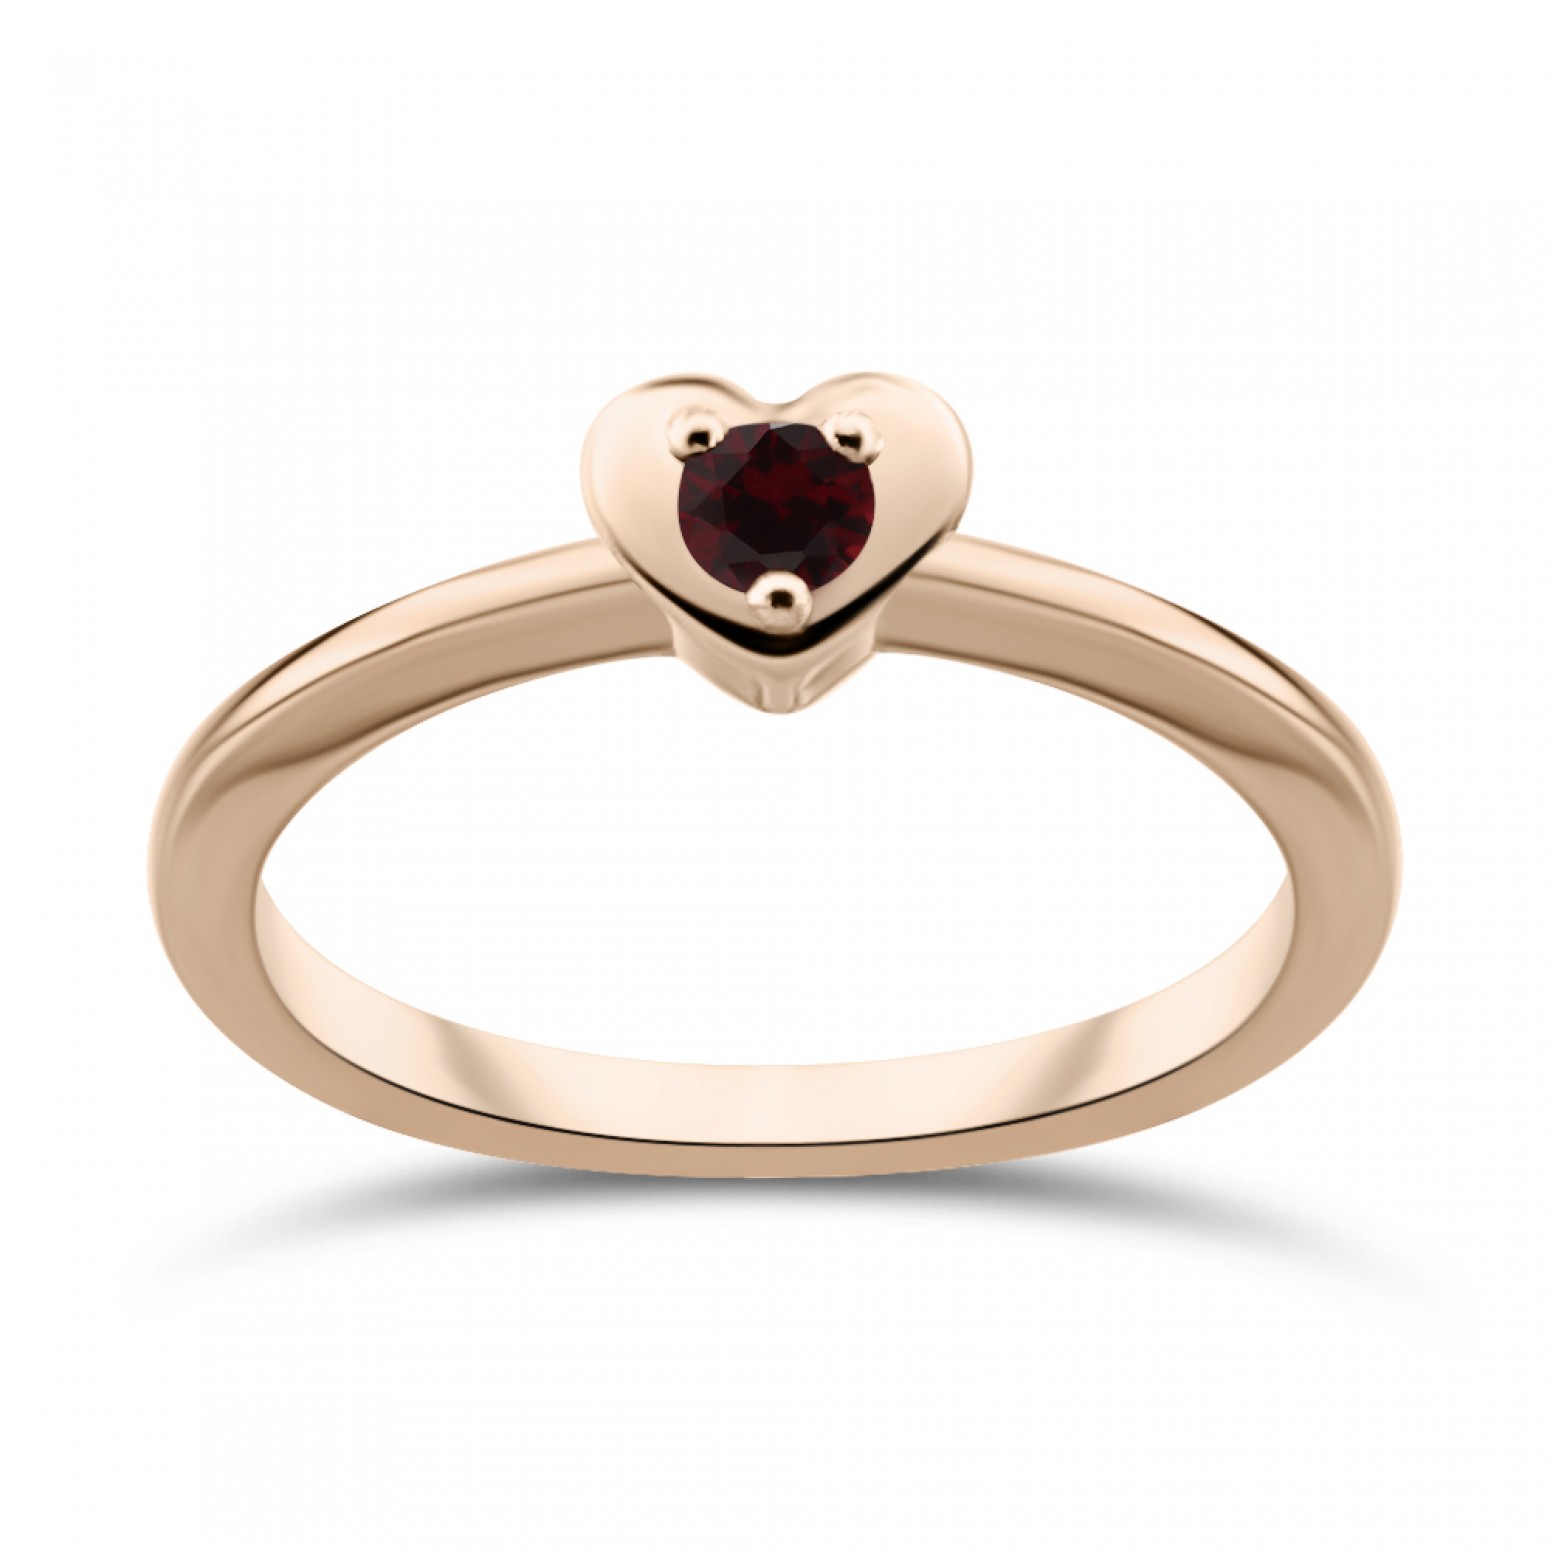 Heart ring, 18K pink gold with ruby 0.12ct, da3993 RINGS Κοσμηματα - chrilia.gr